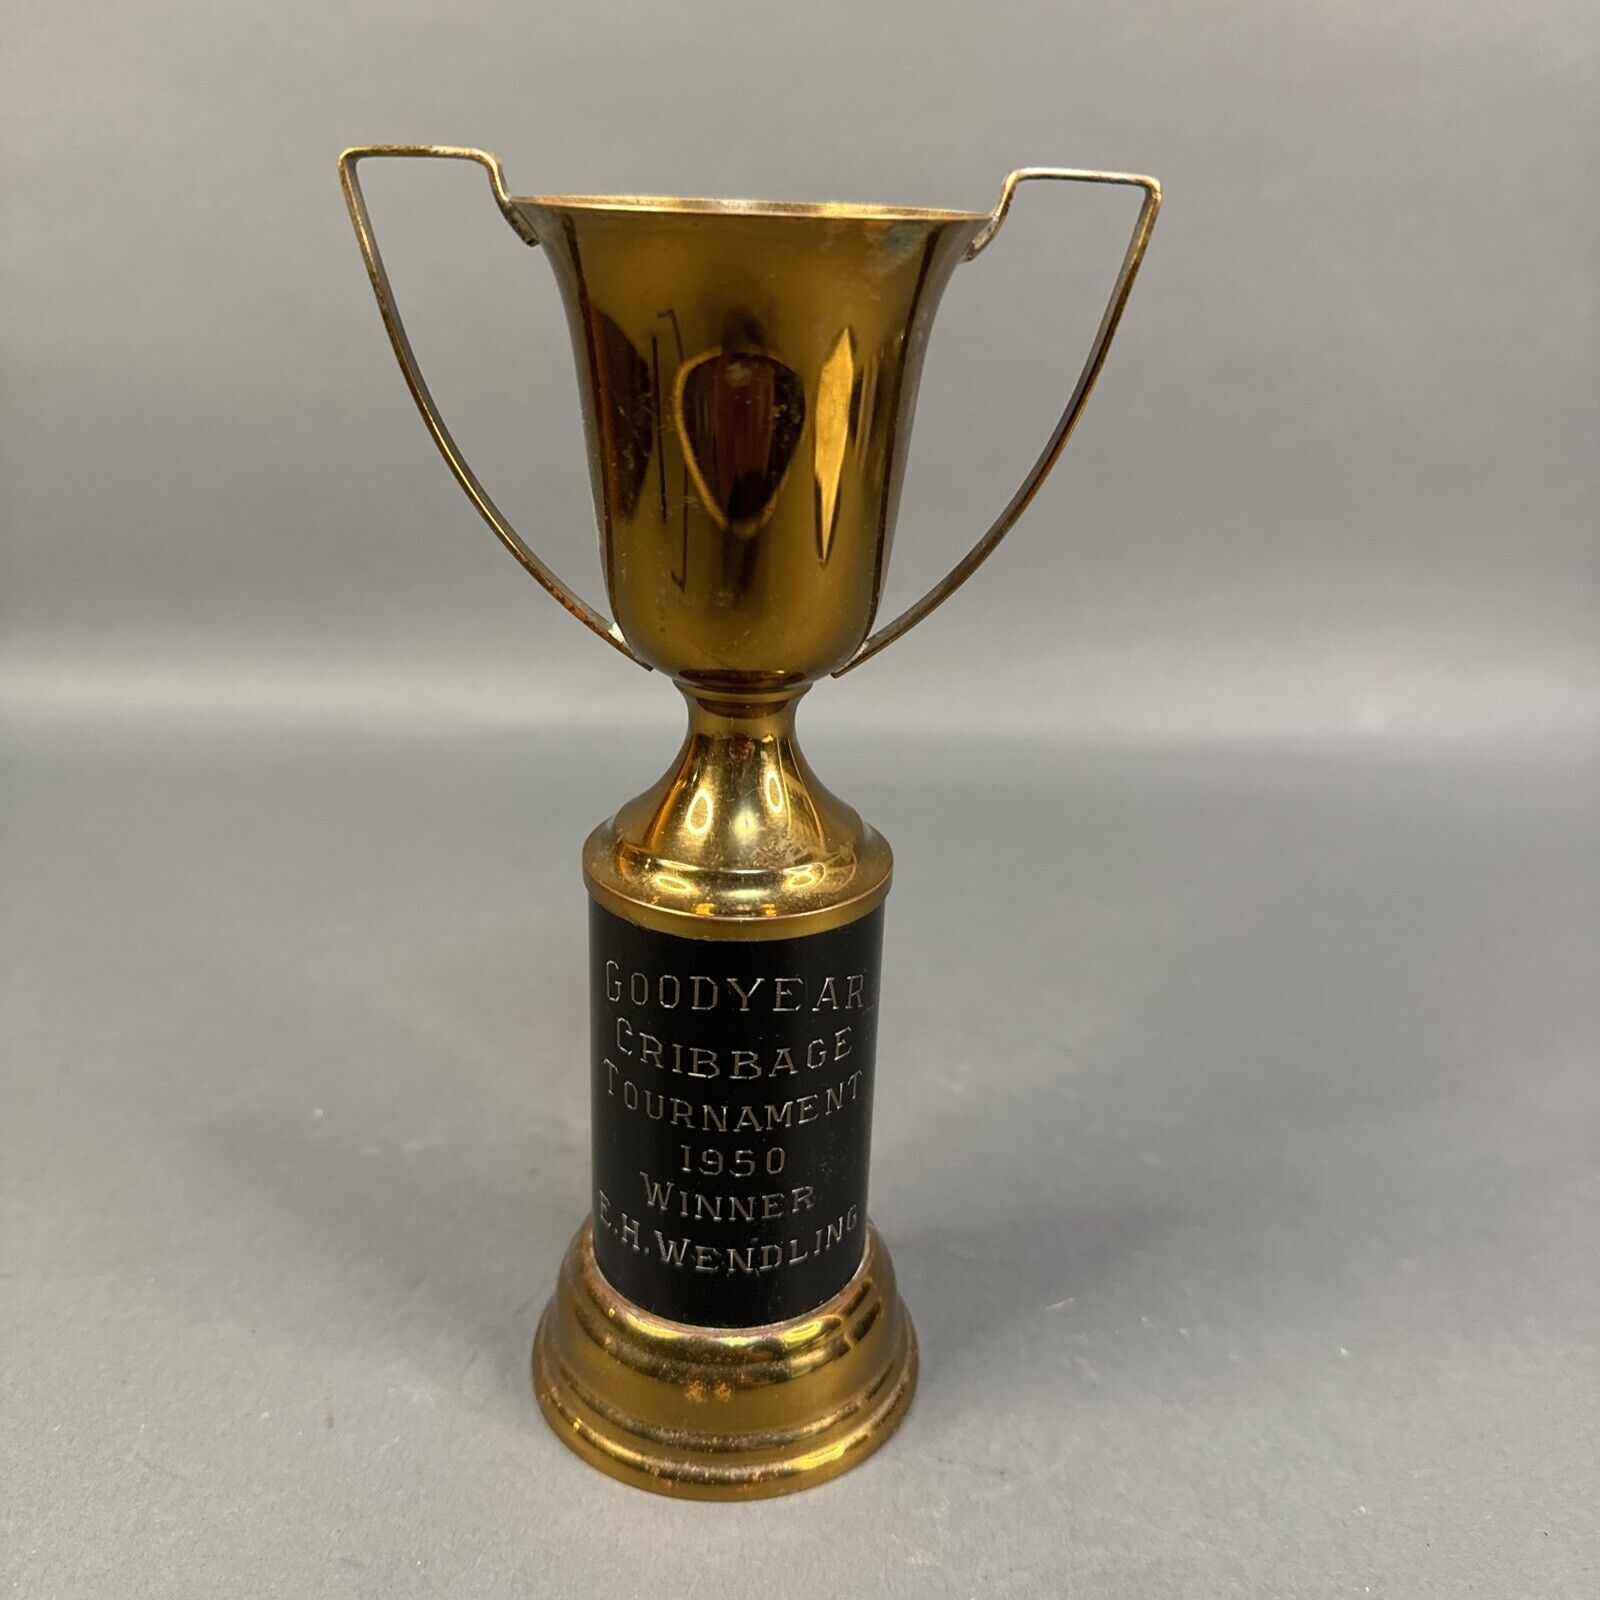 Vintage Goodyear Cribbage Tournament Trophy 1950